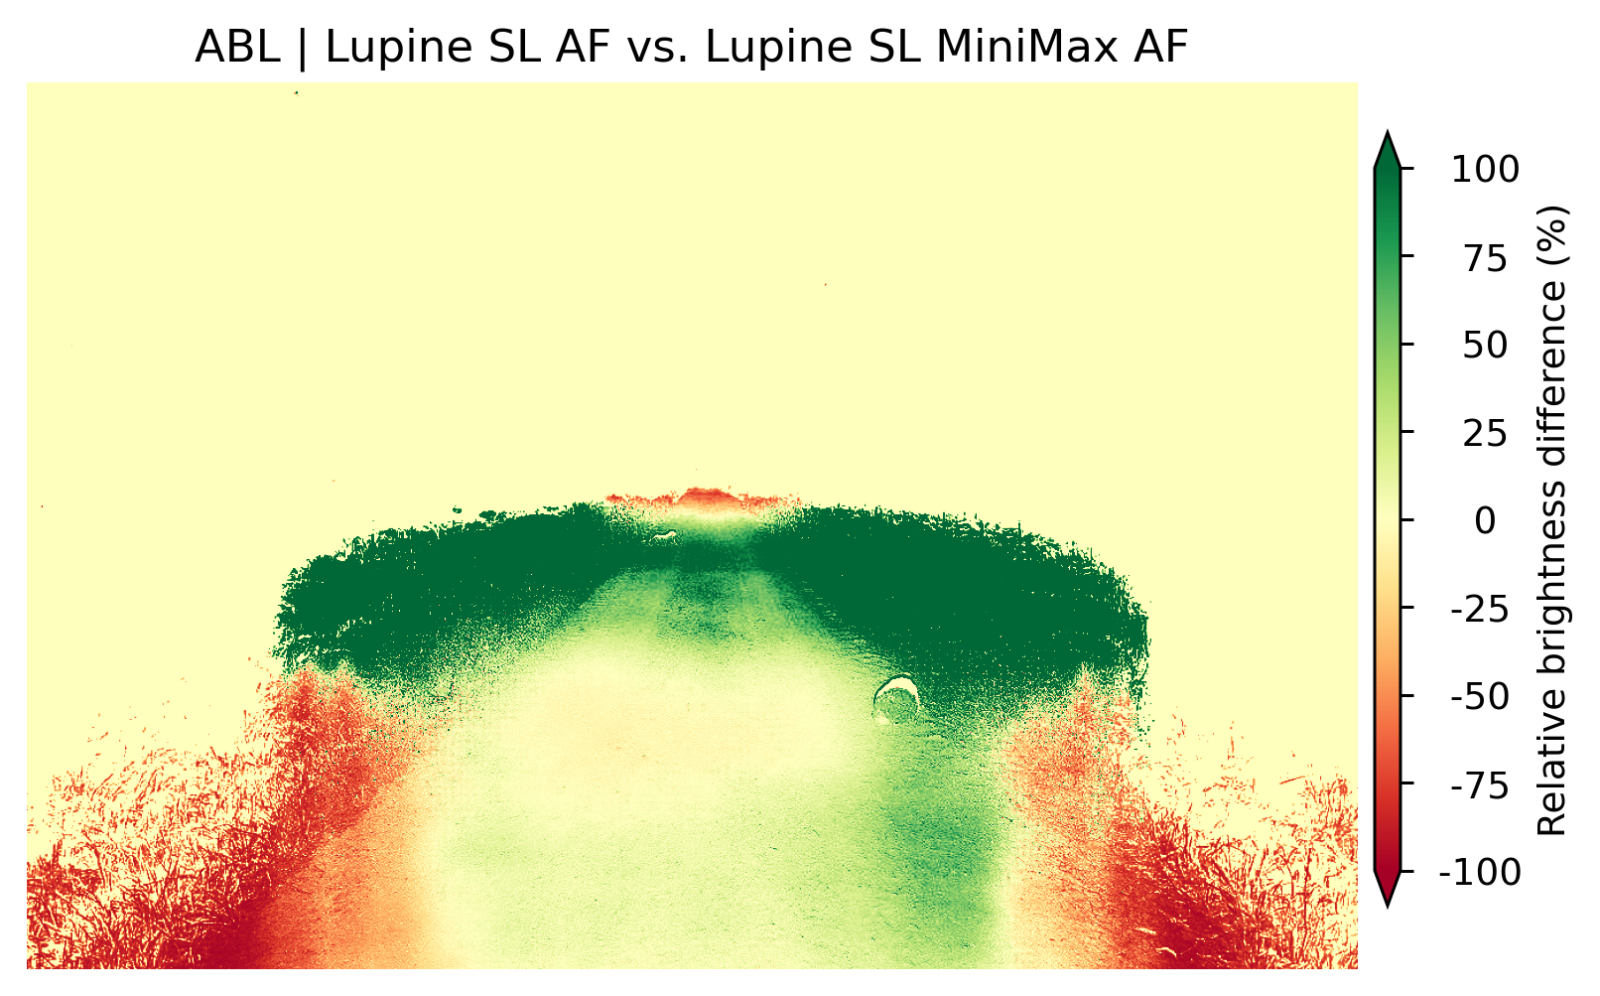 lupine_sl_af_abl_vs_sl_minimax_abl.png